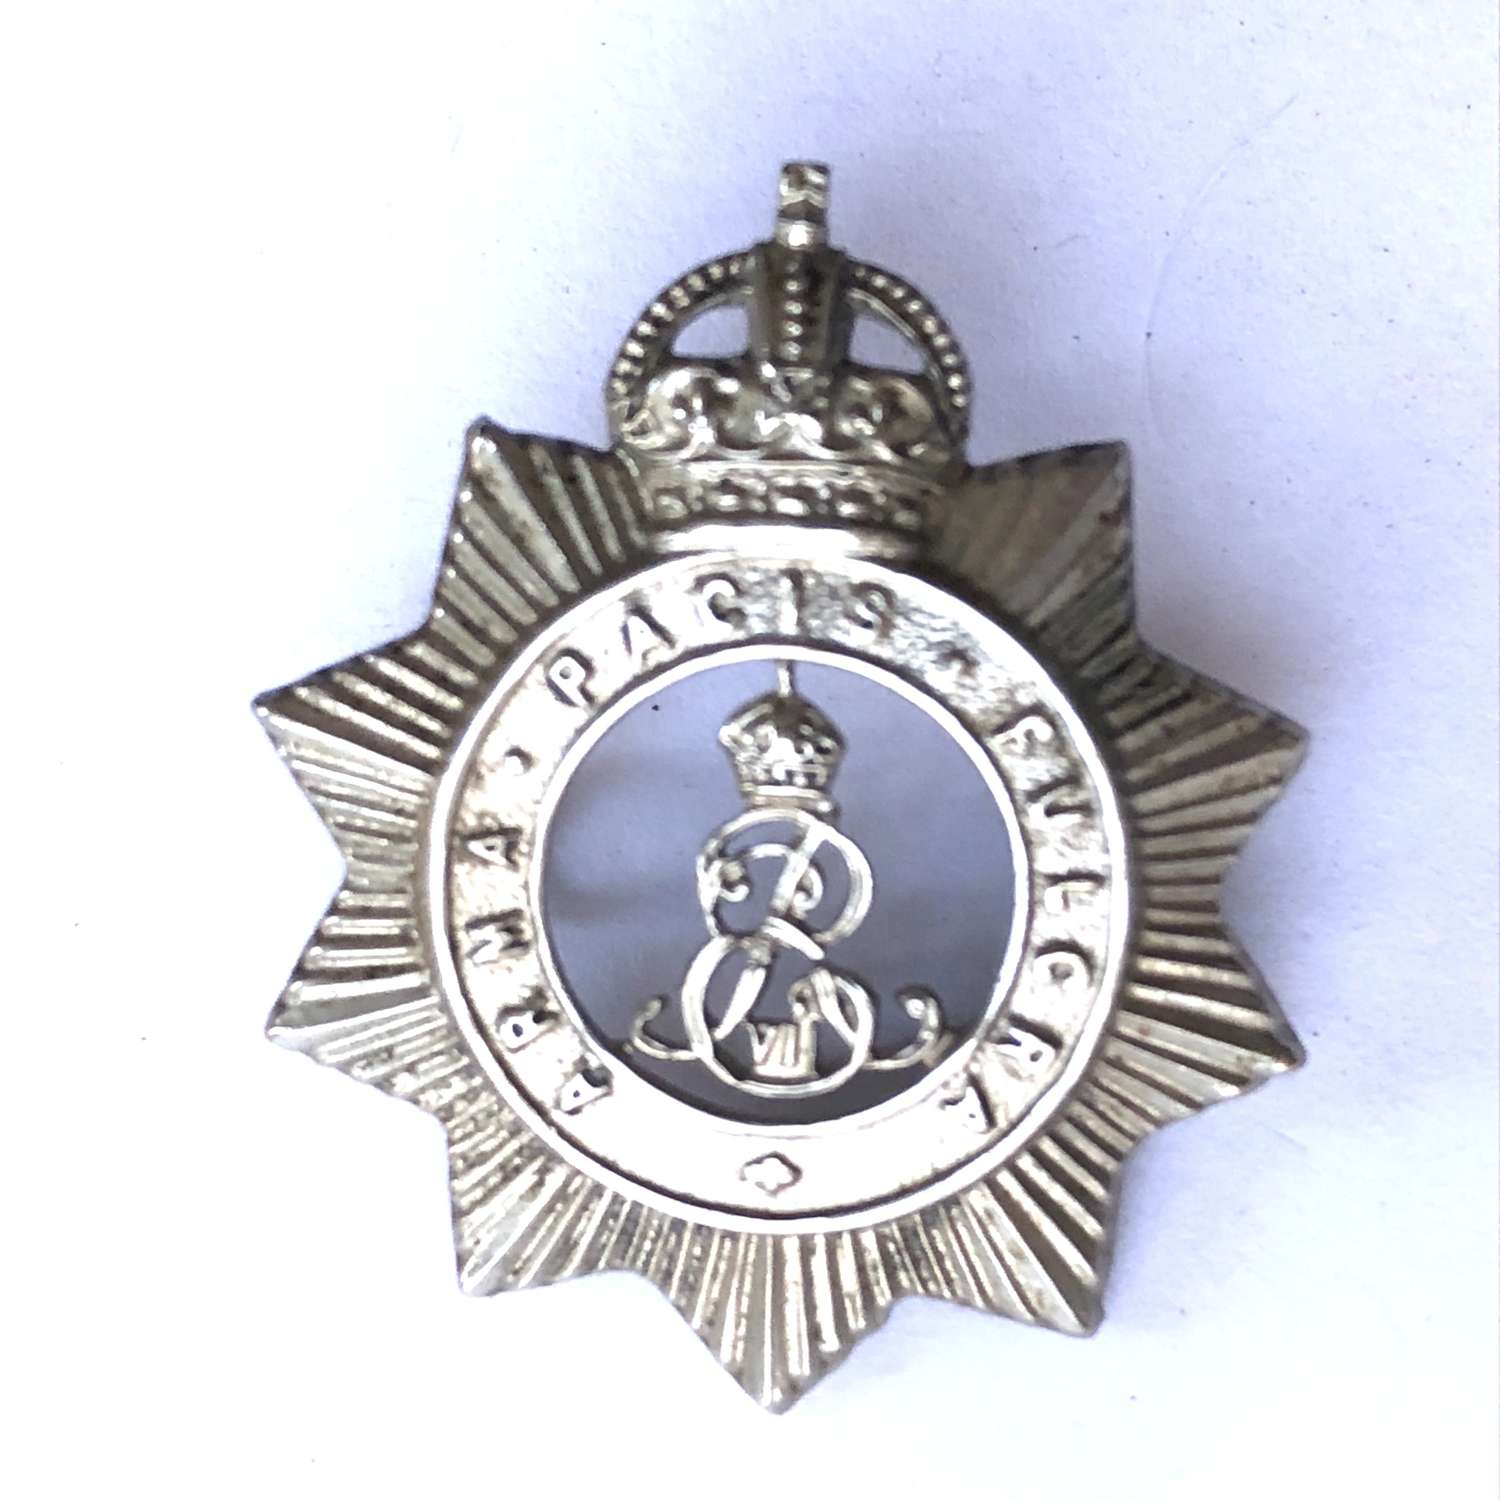 North Somerset Yeomanry EdVII cap badge circa 1908-10